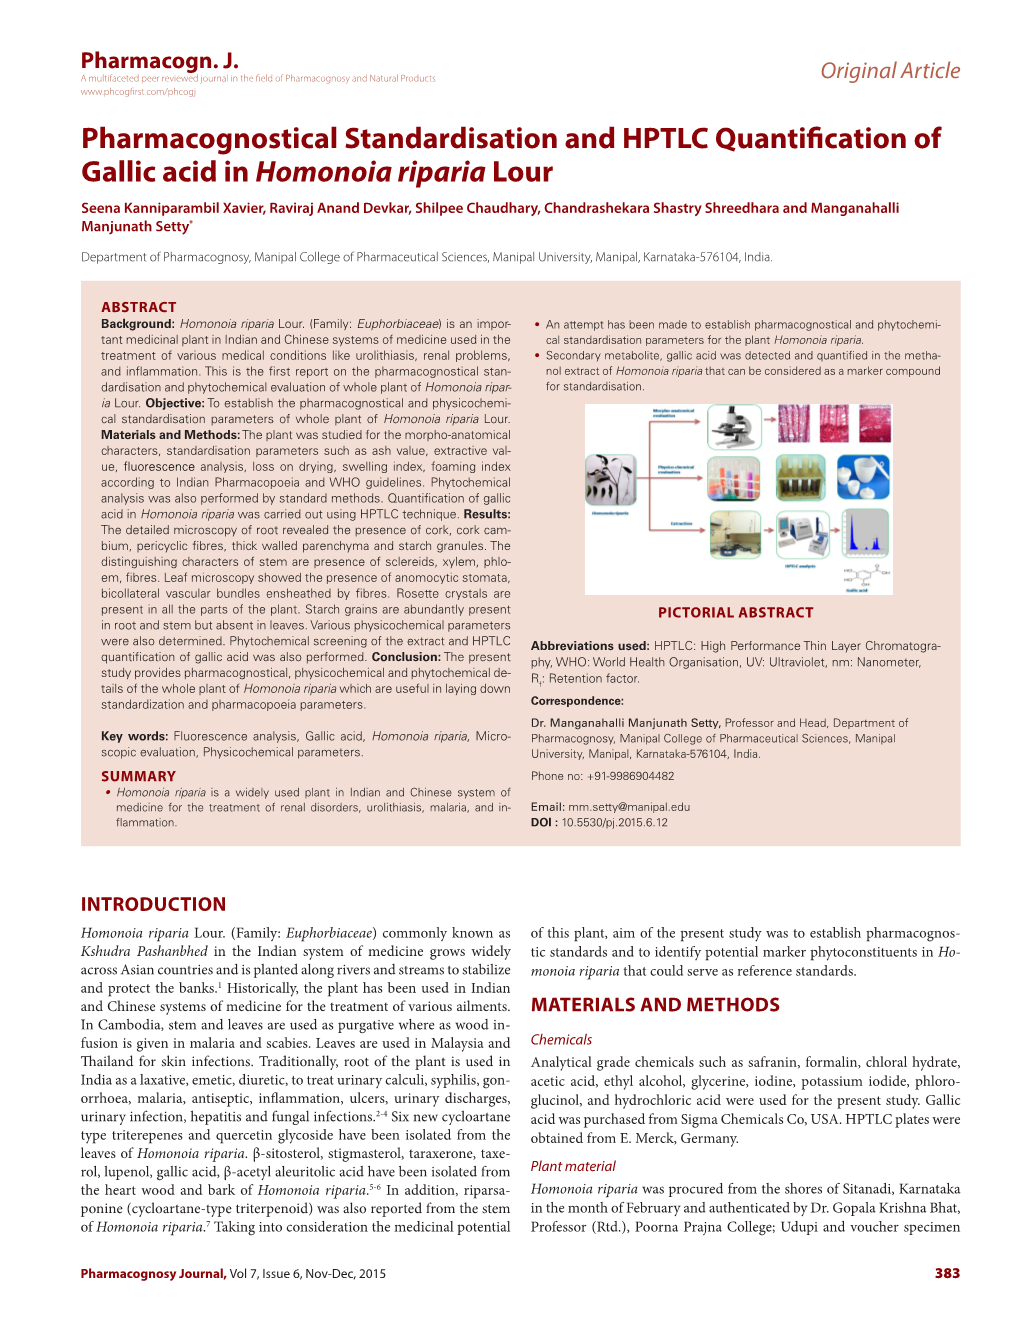 Pharmacognostical Standardisation and HPTLC Quantification of Gallic